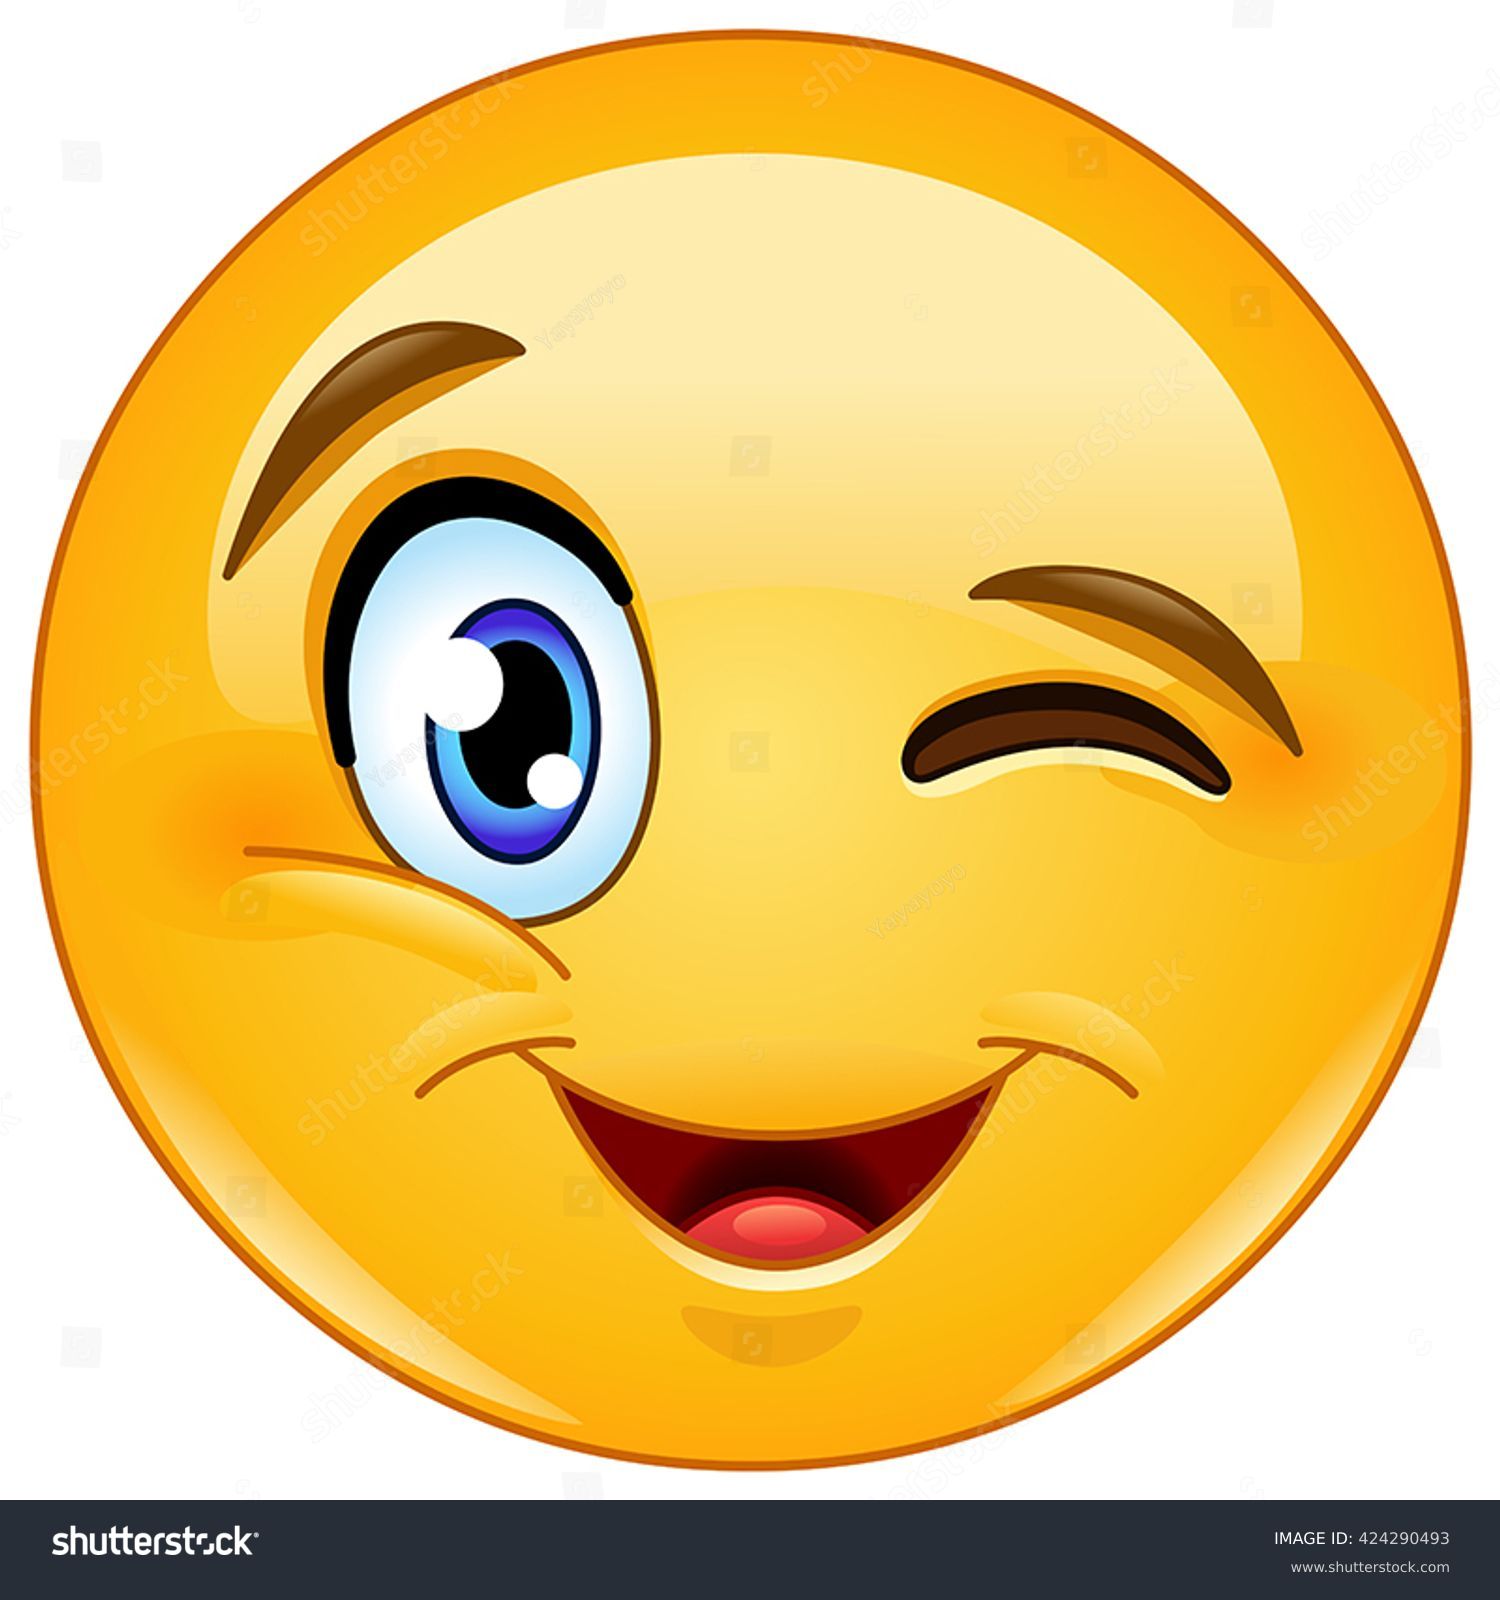 Winking Smiling Emoticon Stock Vector 424290493 Shutterstock